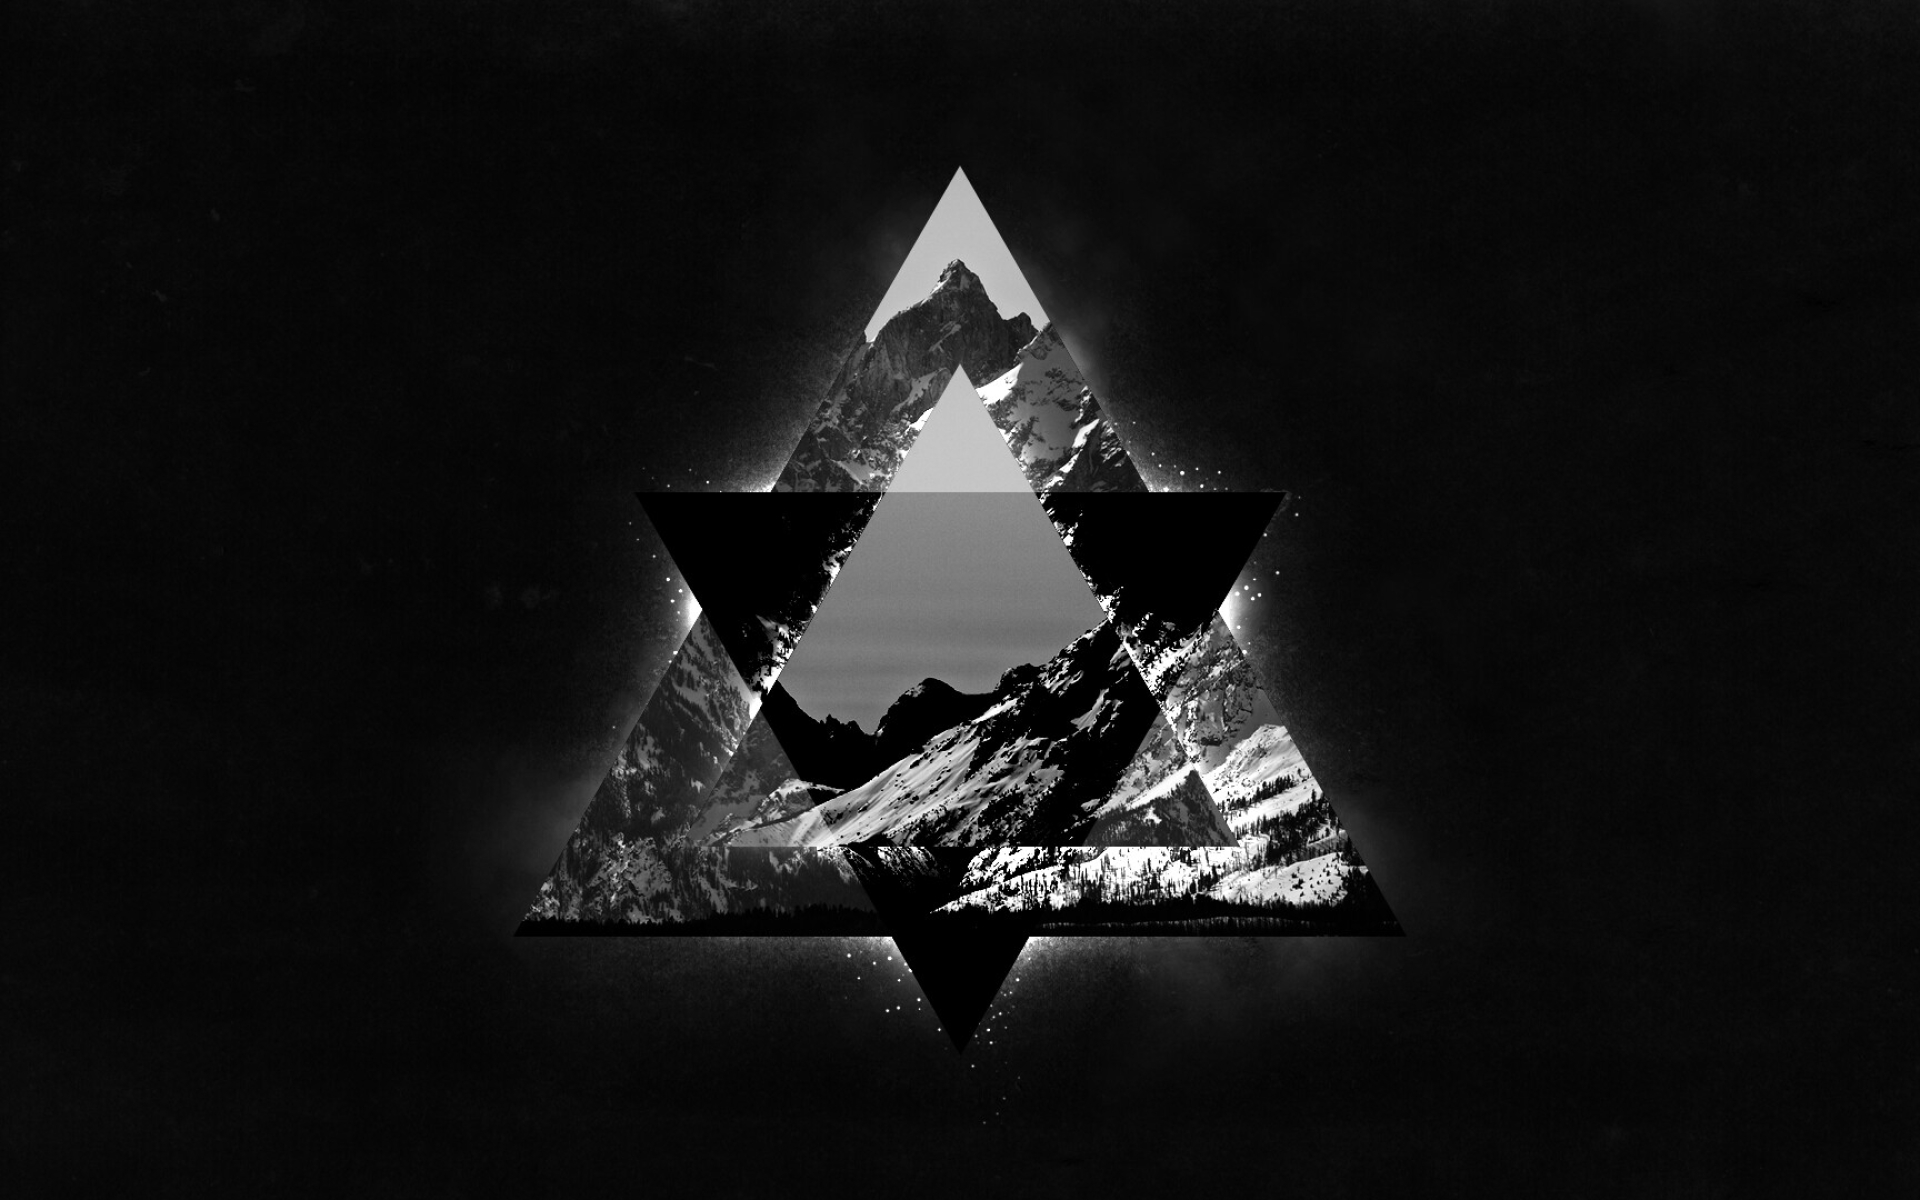 Triangle: Black and white David star, Mountain, Monochrome. 1920x1200 HD Wallpaper.